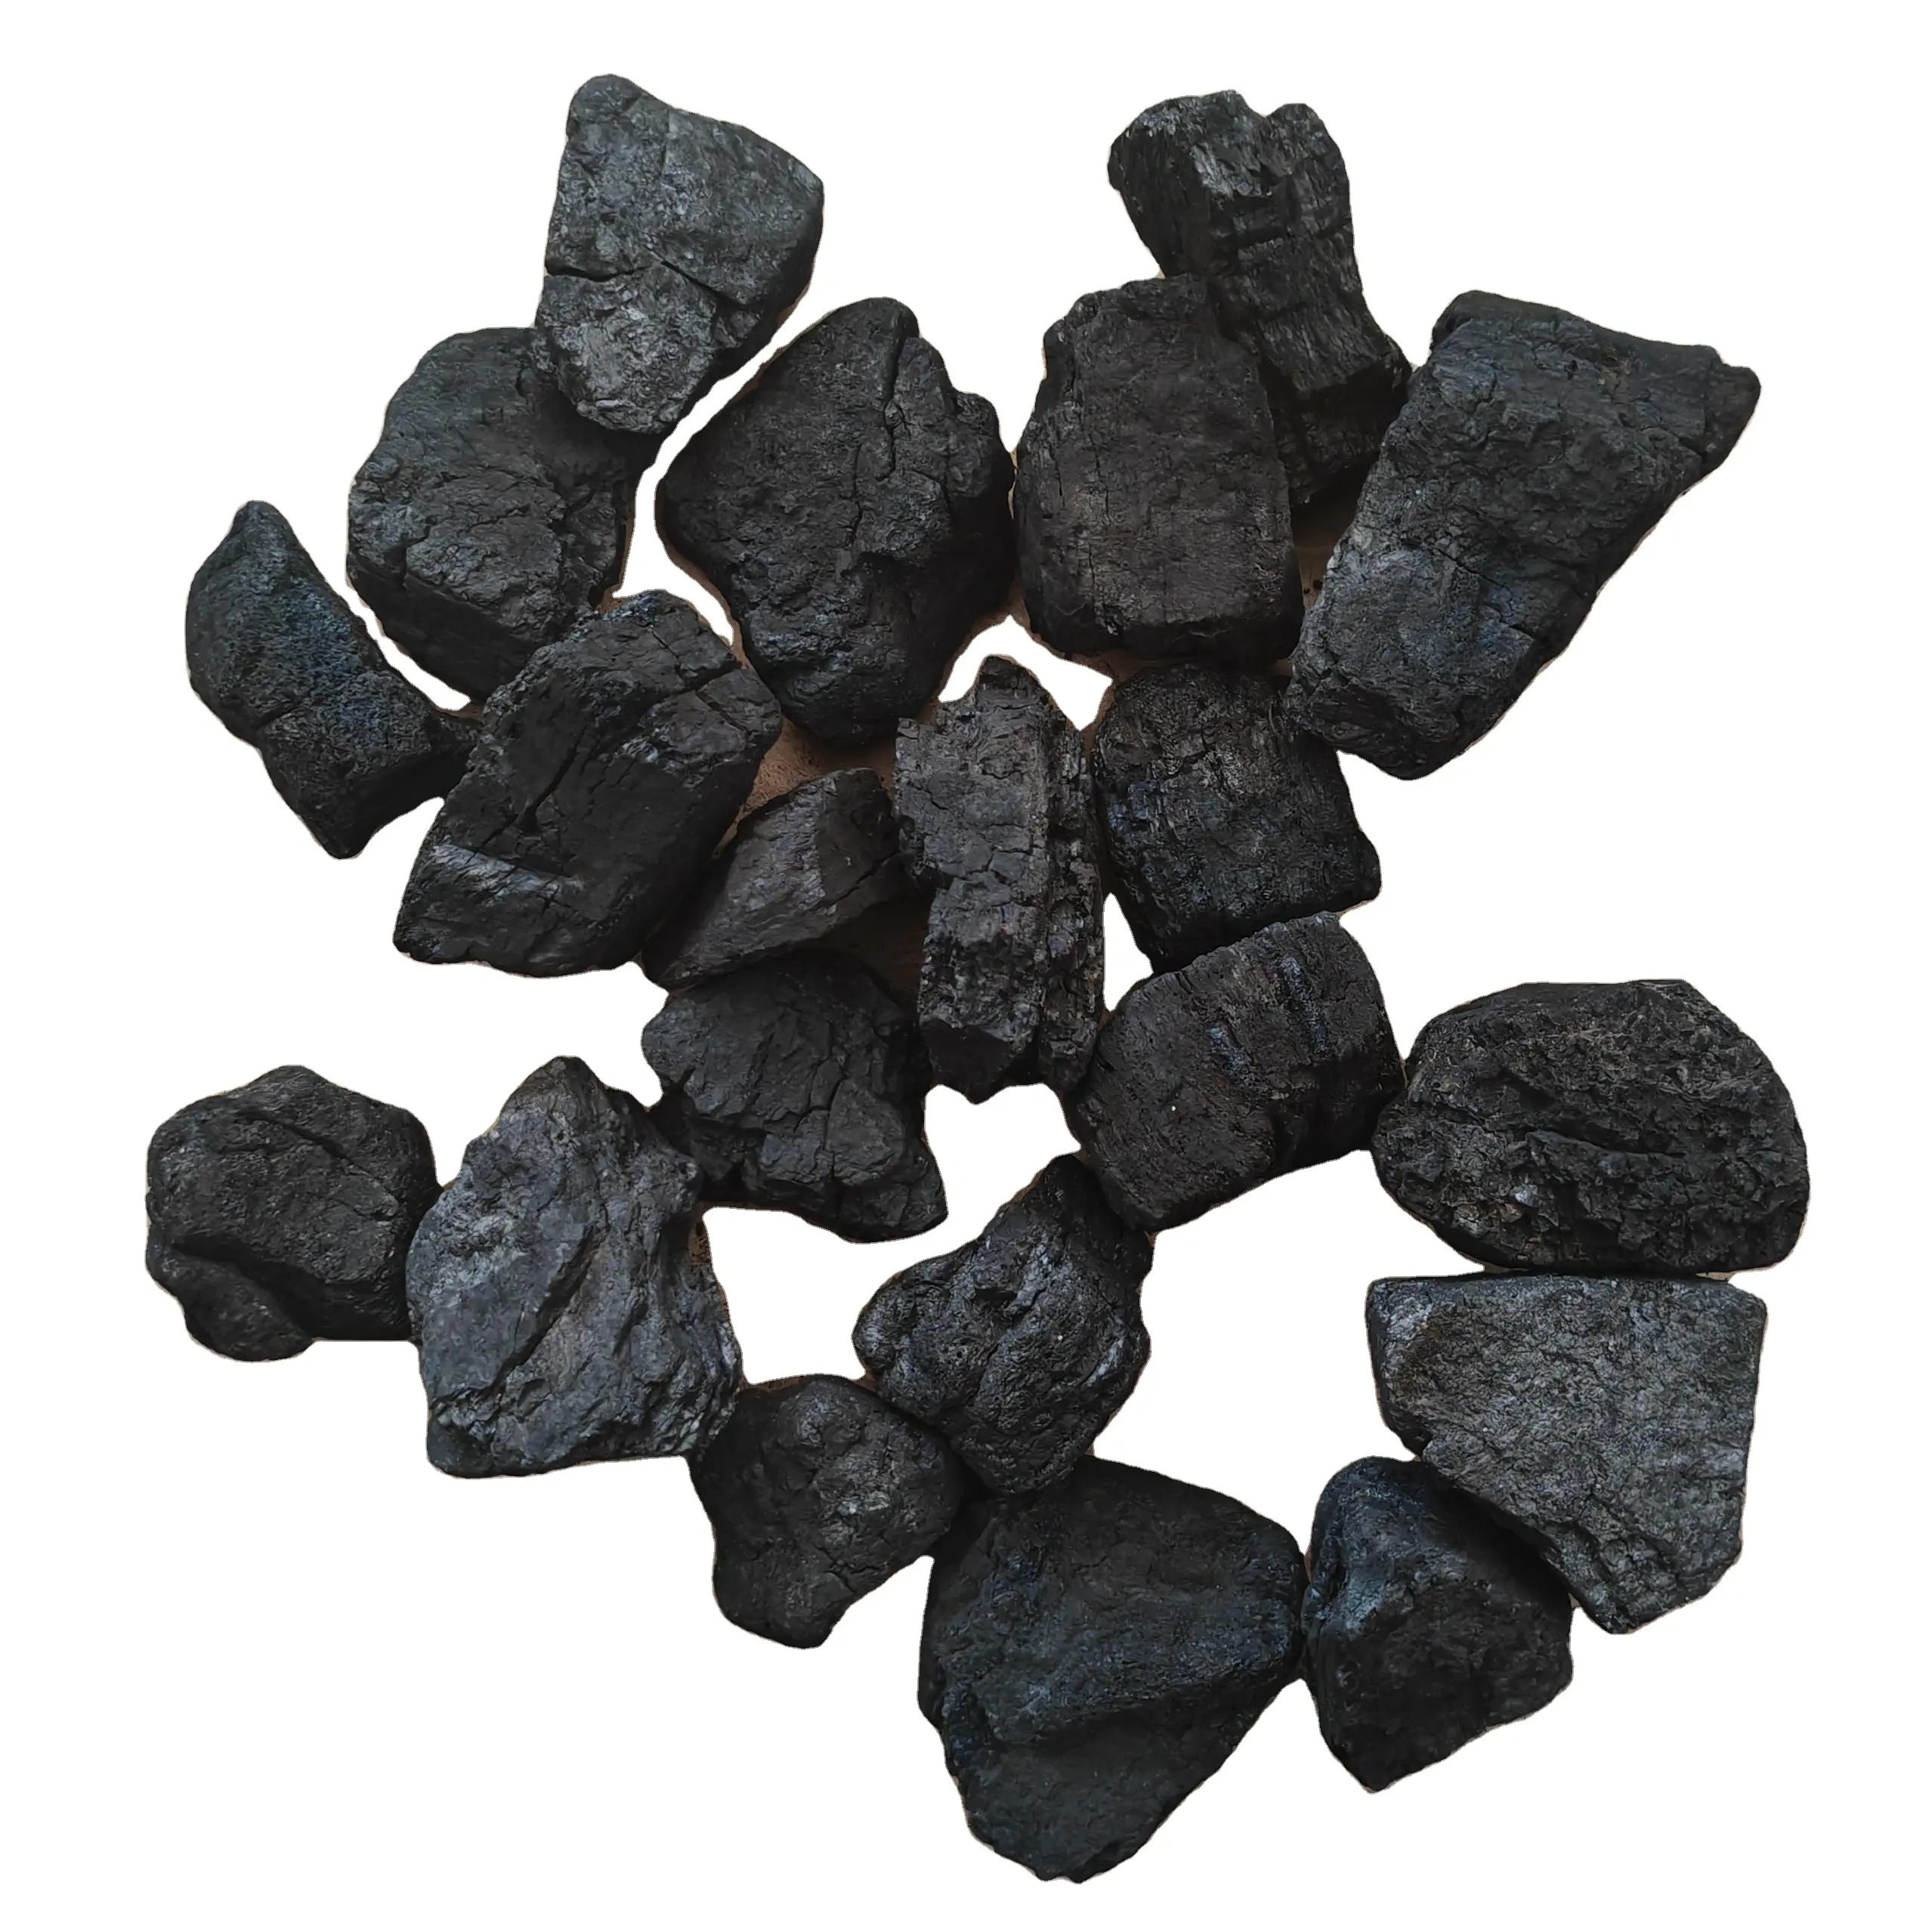 Briquetes do Semi-coque semi coque para a fatura do ferro